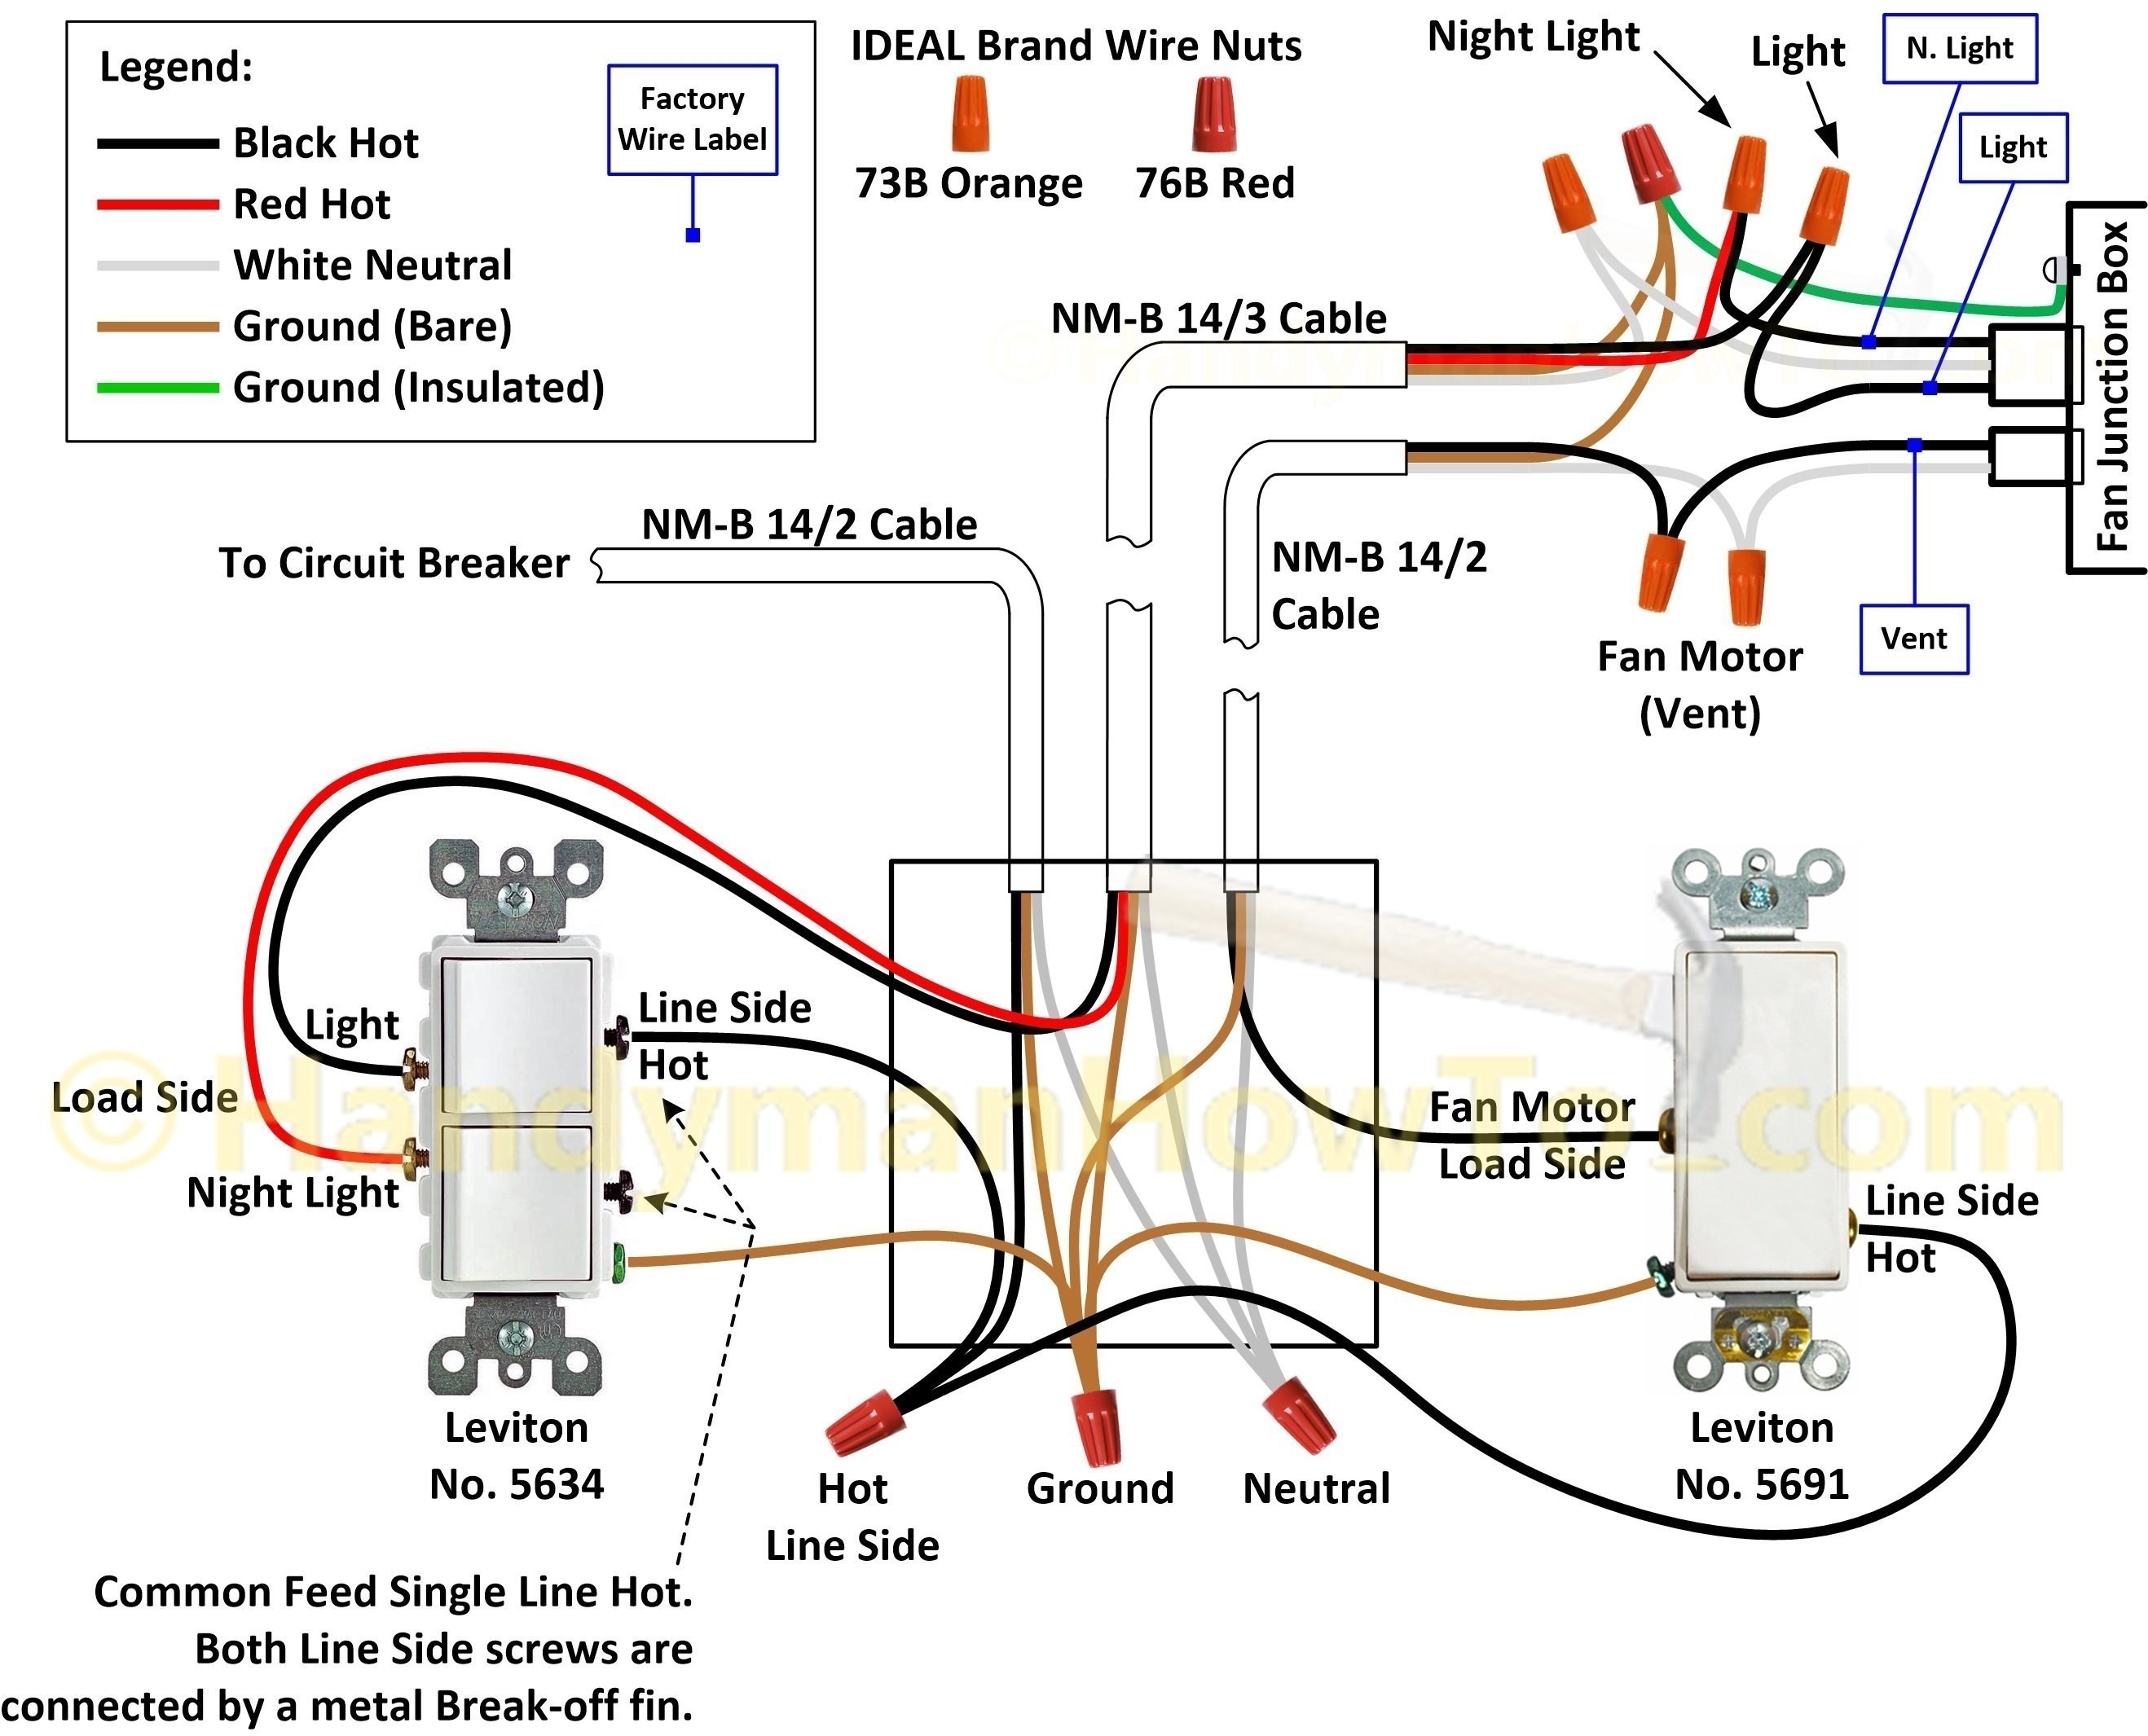 Wiring Diagram Electric Bike Best Wiring Diagram Lighting Circuit Valid Hardware Diagram 0d